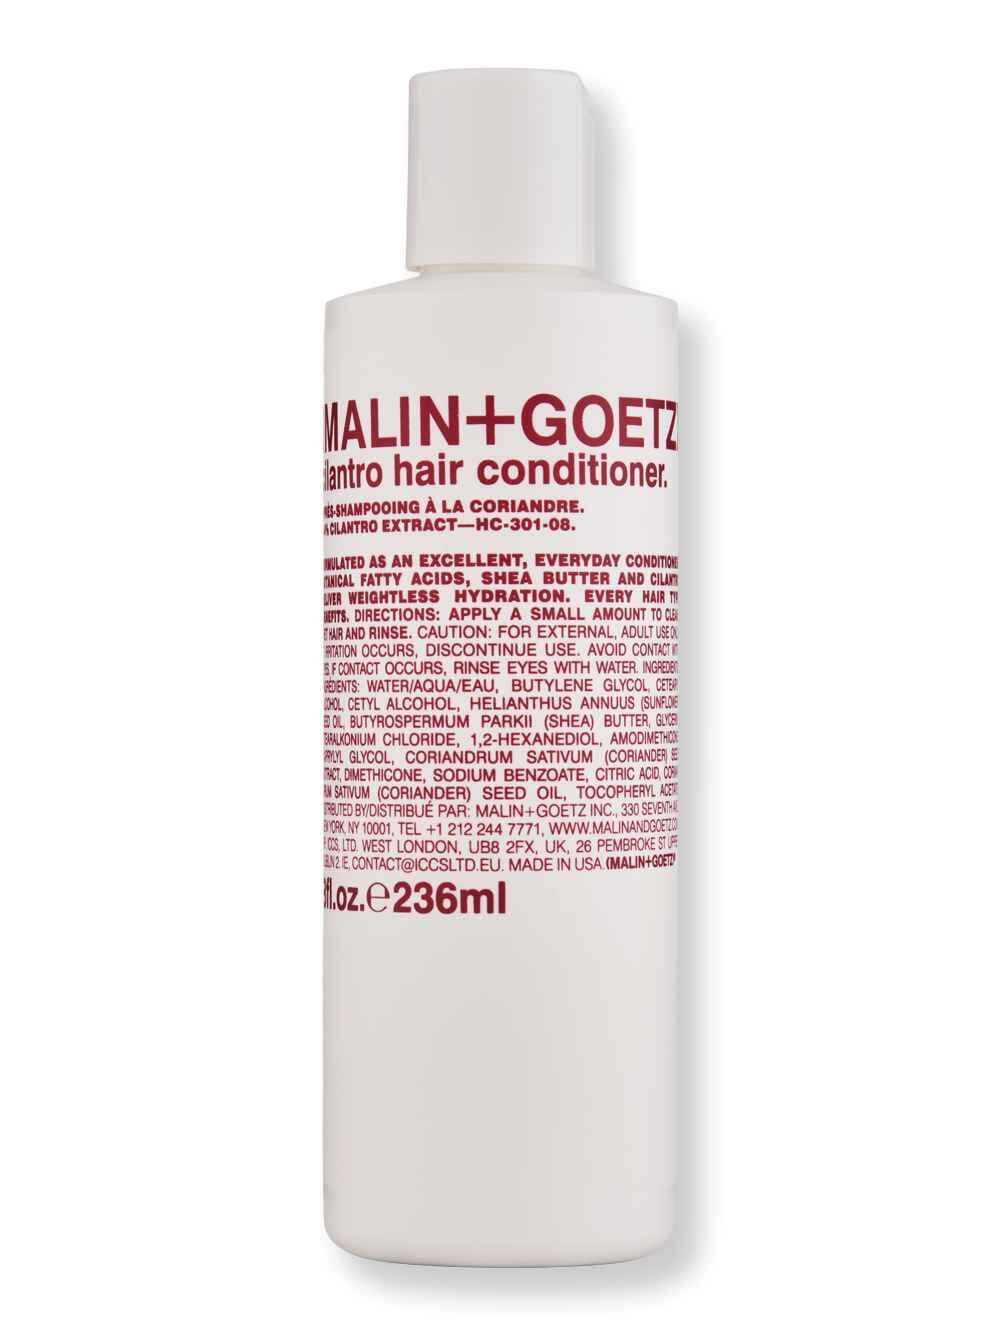 Malin + Goetz Malin + Goetz Cilantro Hair Conditioner 8 oz236 ml Conditioners 